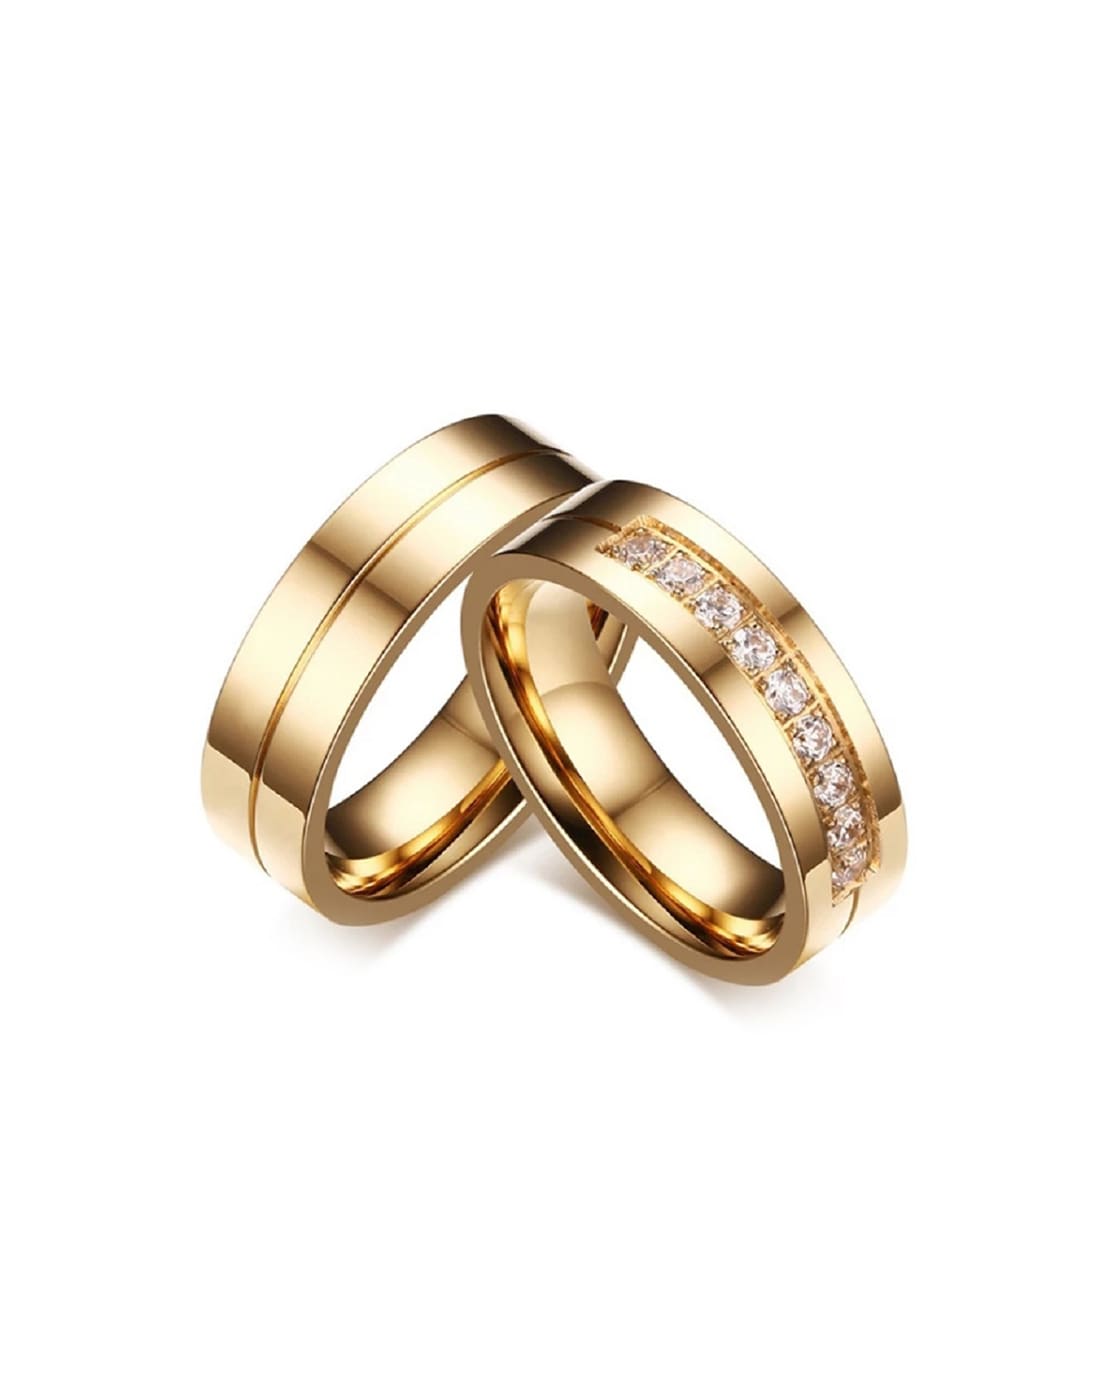 Golden Wedding Ring PNG Image, Couple Golden Wedding Ring, Couple, Golden, Wedding  PNG Image For Free Download